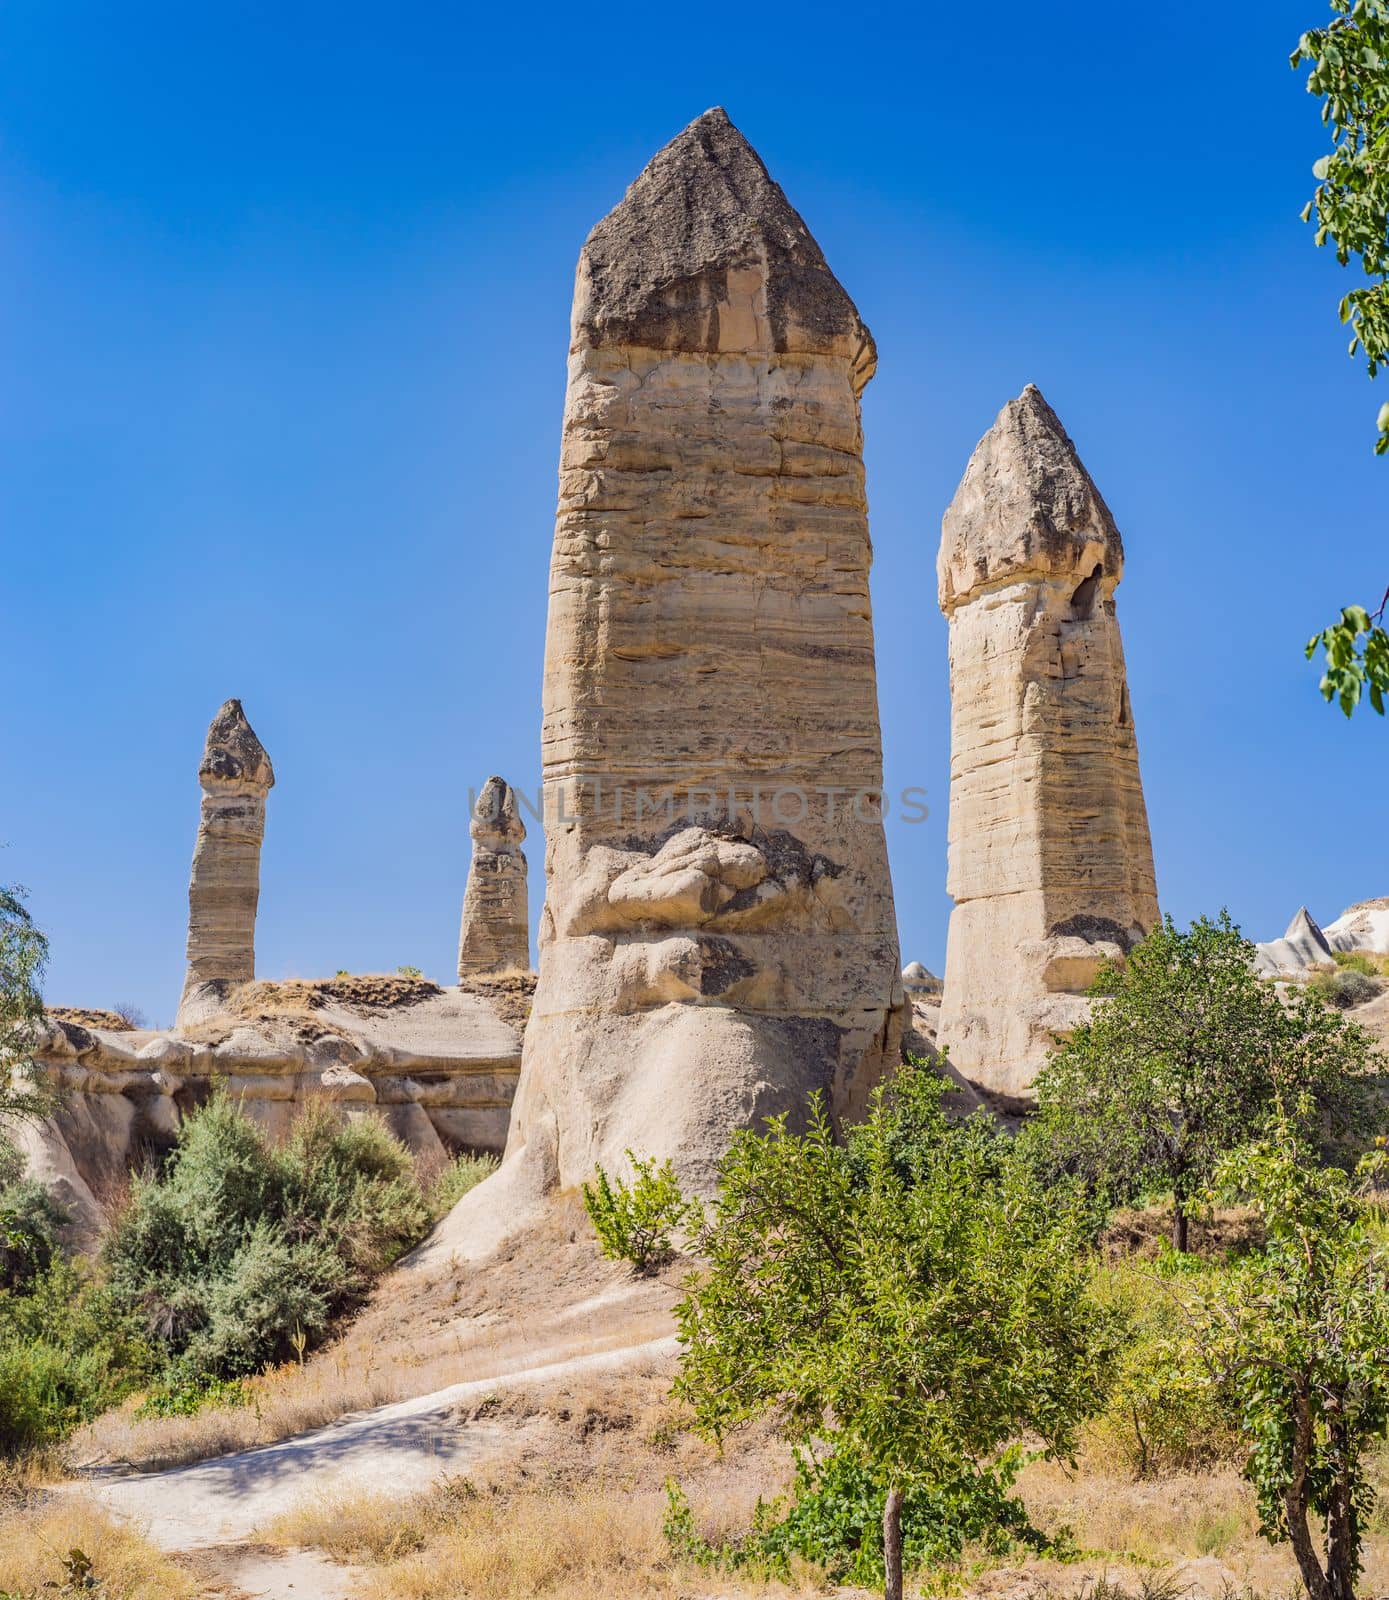 Unique geological formations in Love Valley in Cappadocia, popular travel destination in Turkey by galitskaya